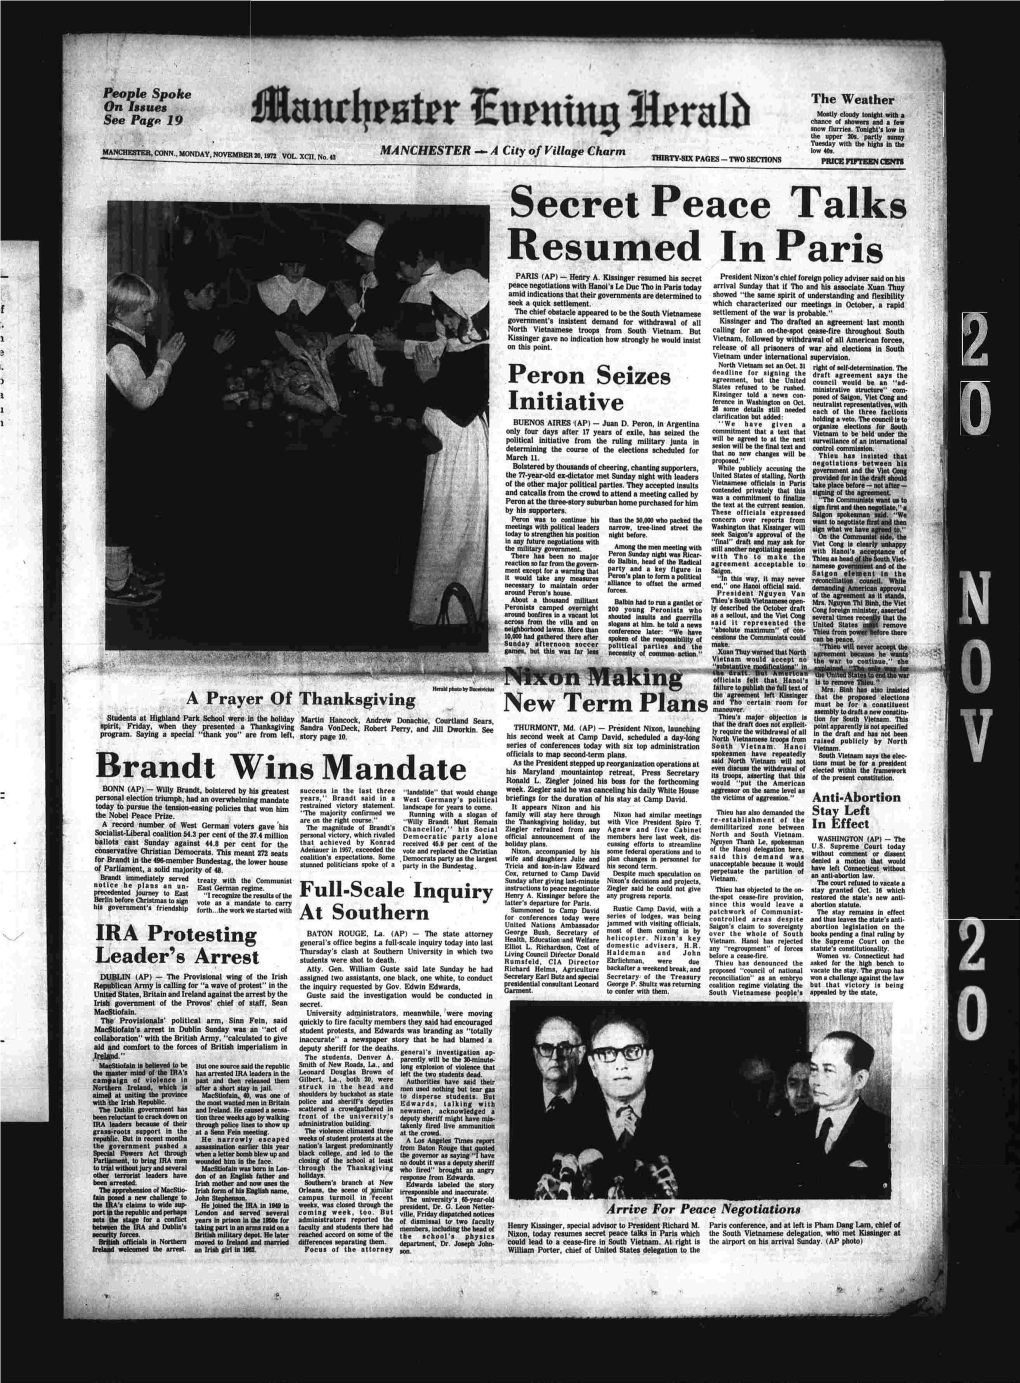 Secret Peace Talks Resumed in Paris PARIS (AP) — Heilry A